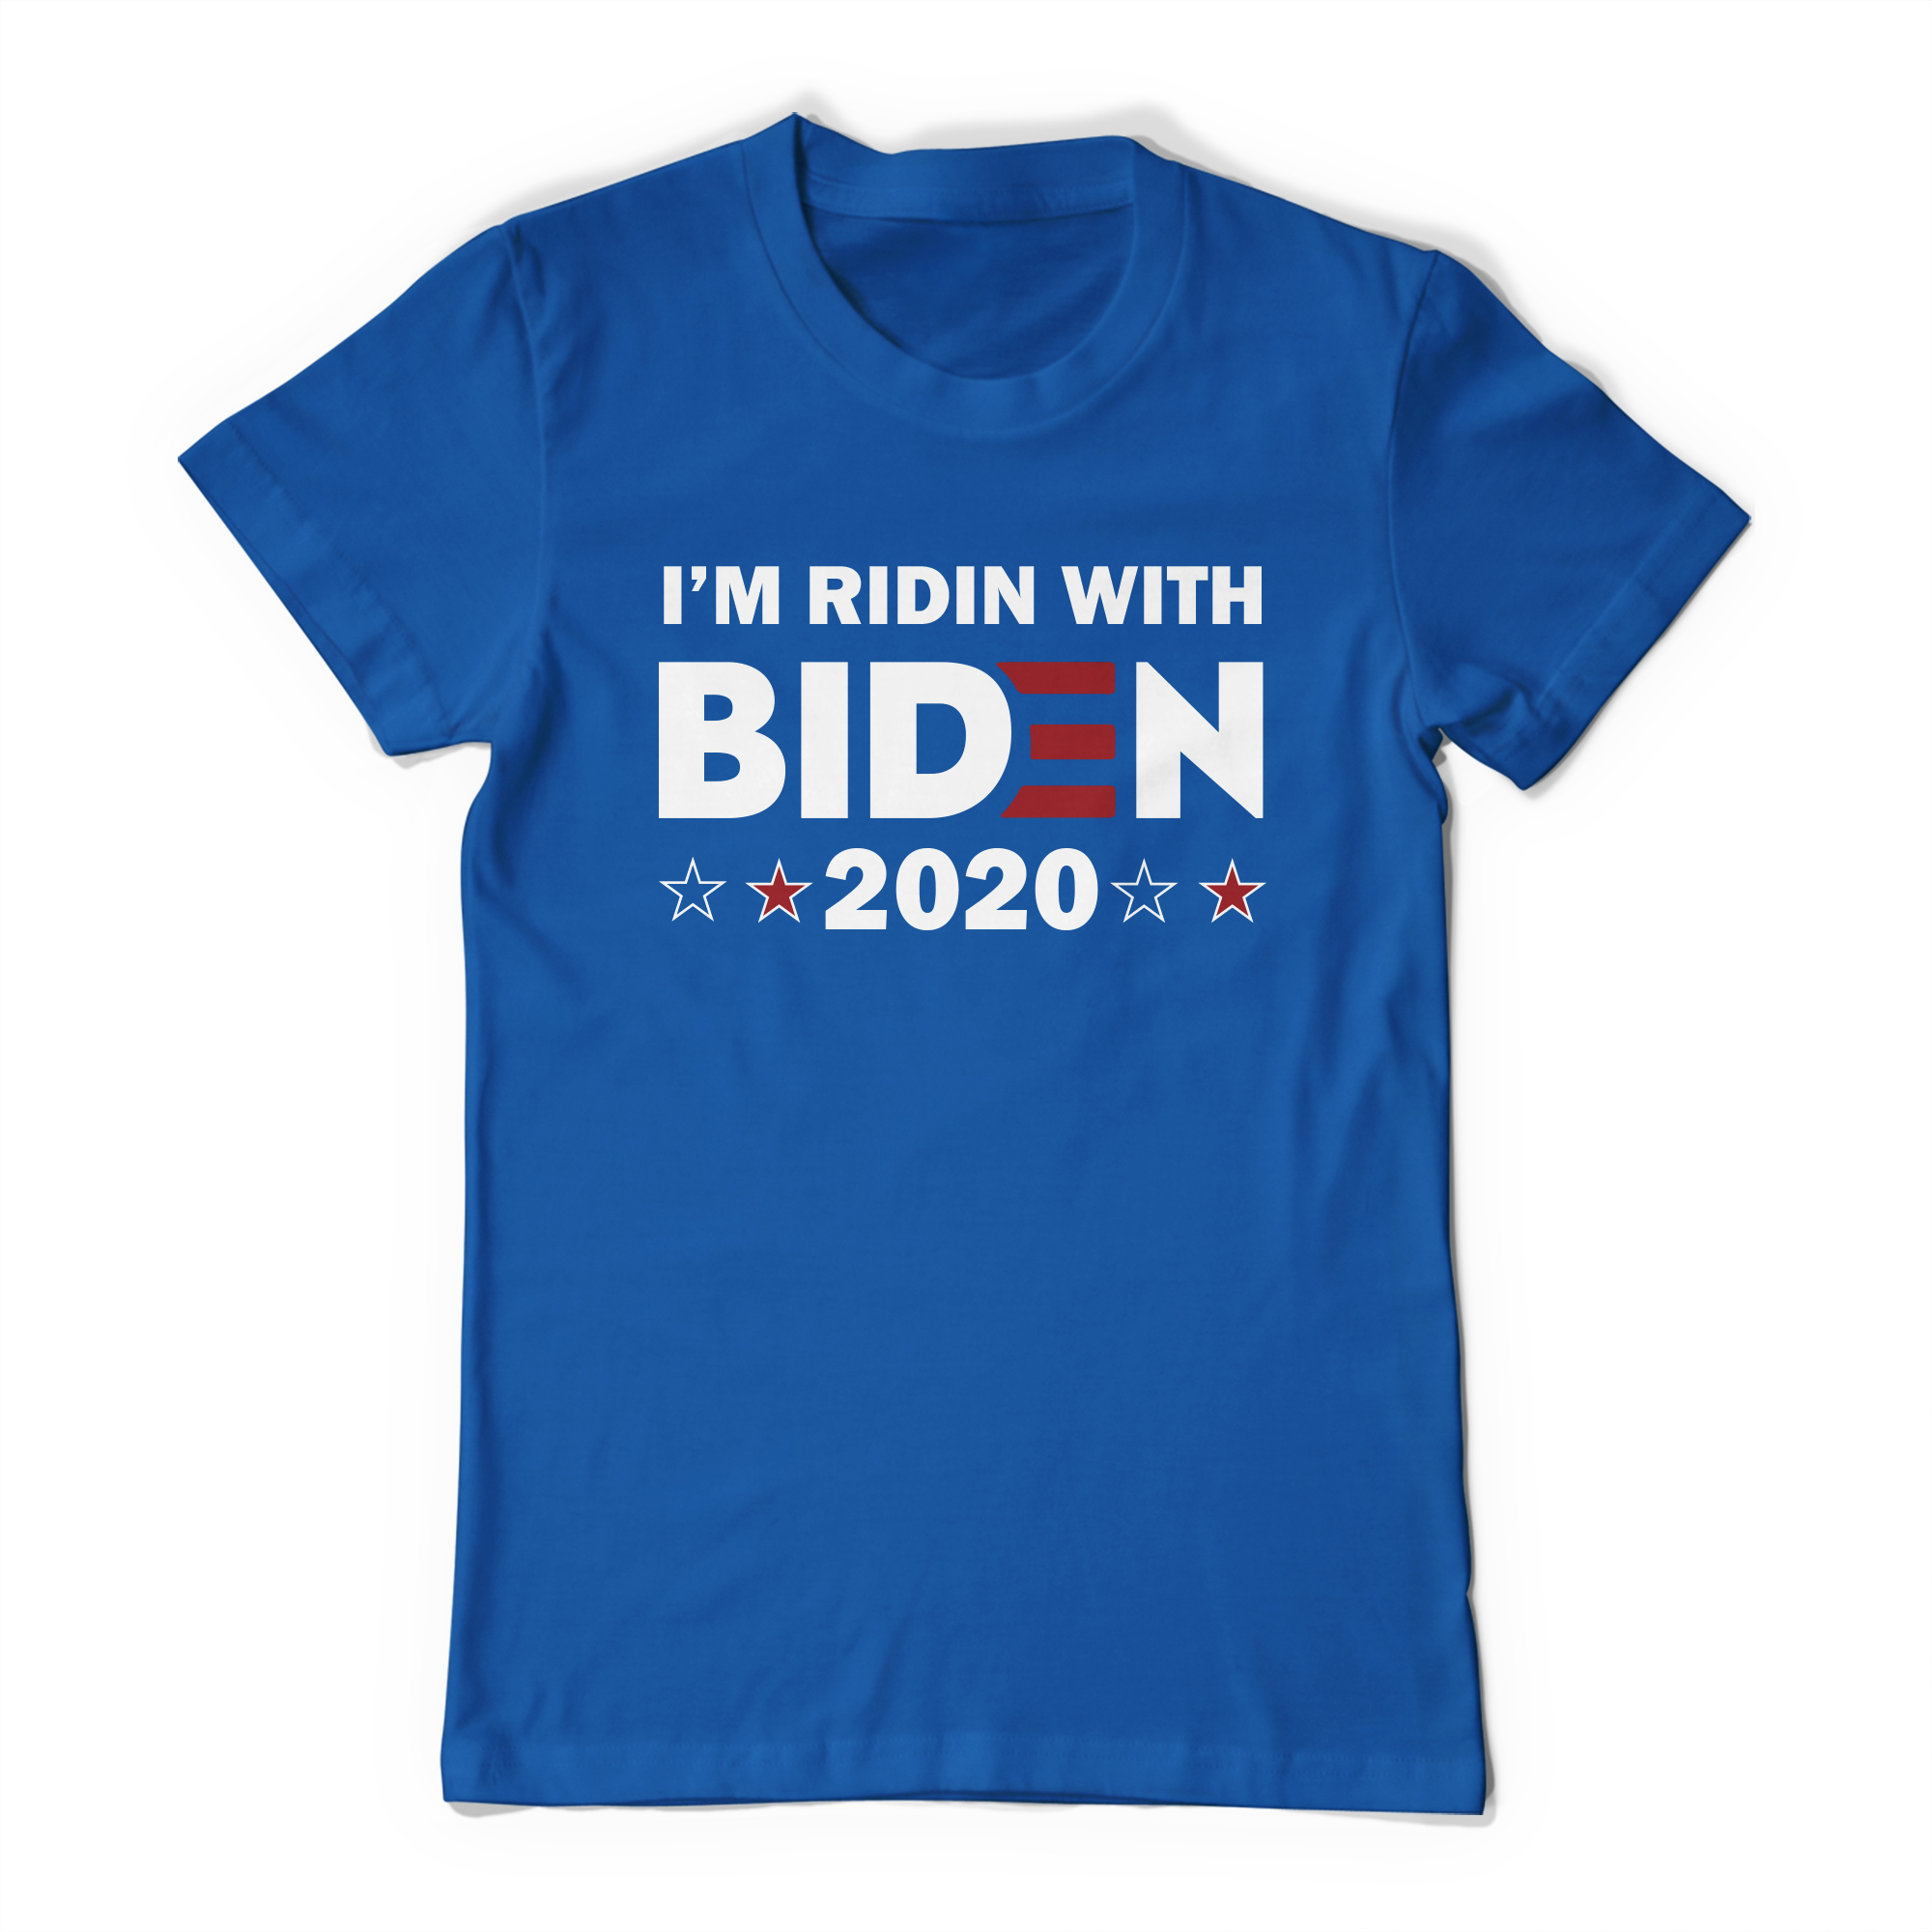 I'M RIDIN WITH BIDEN 2020 Tee Shirt - Joe Biden For President!